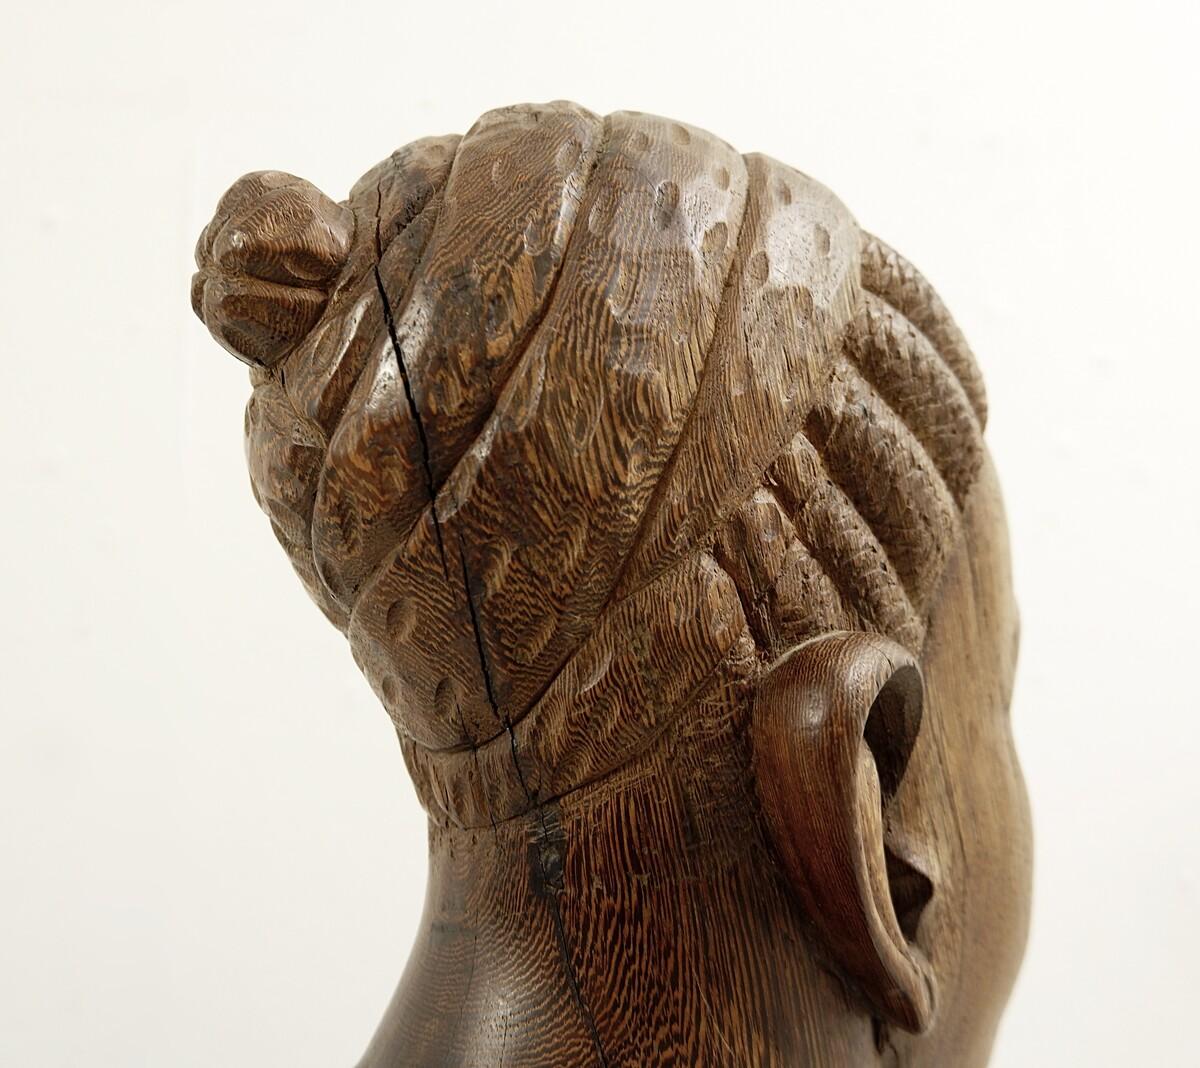 20th Century African Art Wenge Wood Sculpture Signed Joachim Baba Damana, Congo 1970s